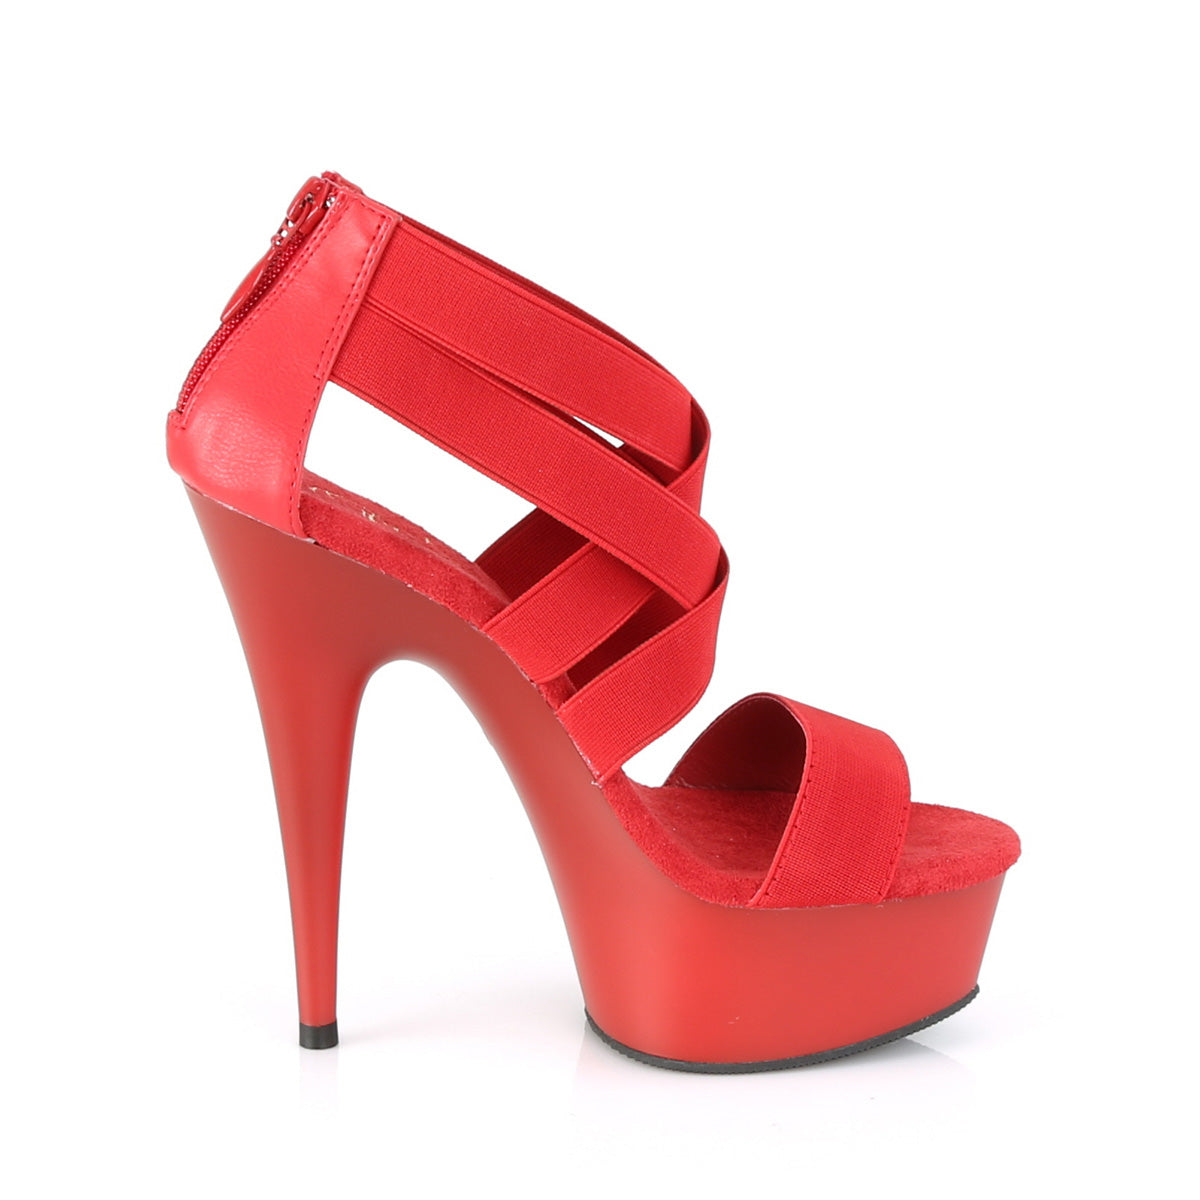 DELIGHT-669 6" Heel Red Elastic Band Pole Dancing Platforms-Pleaser- Sexy Shoes Fetish Heels